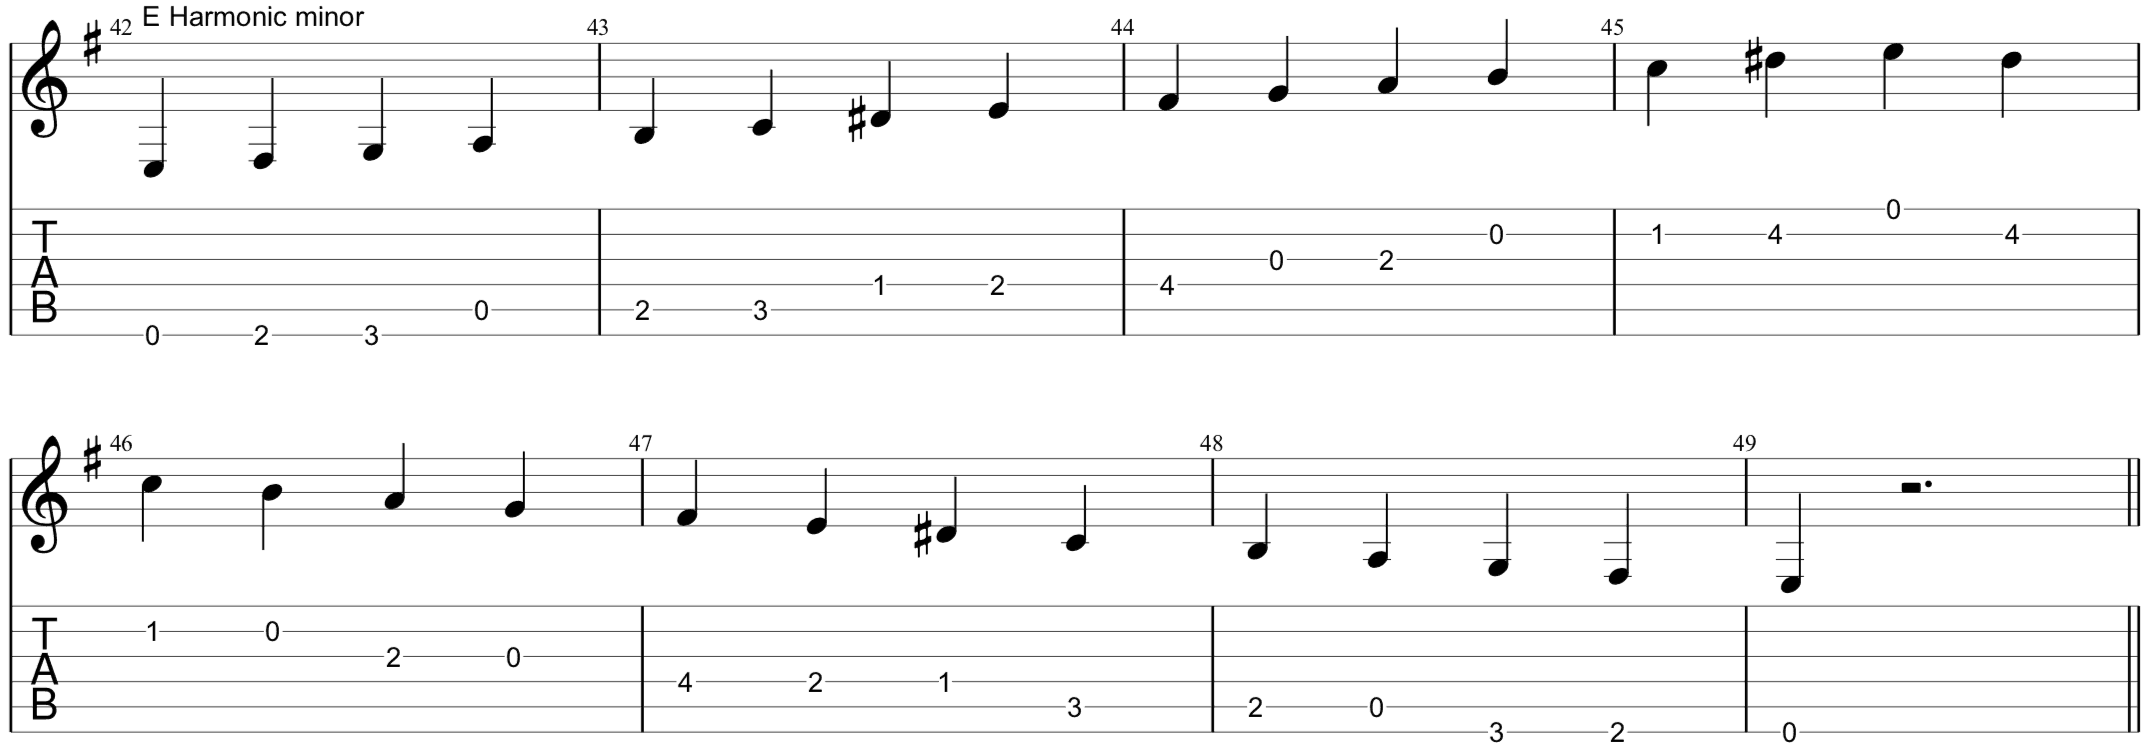 E Harmonic minor with TAB